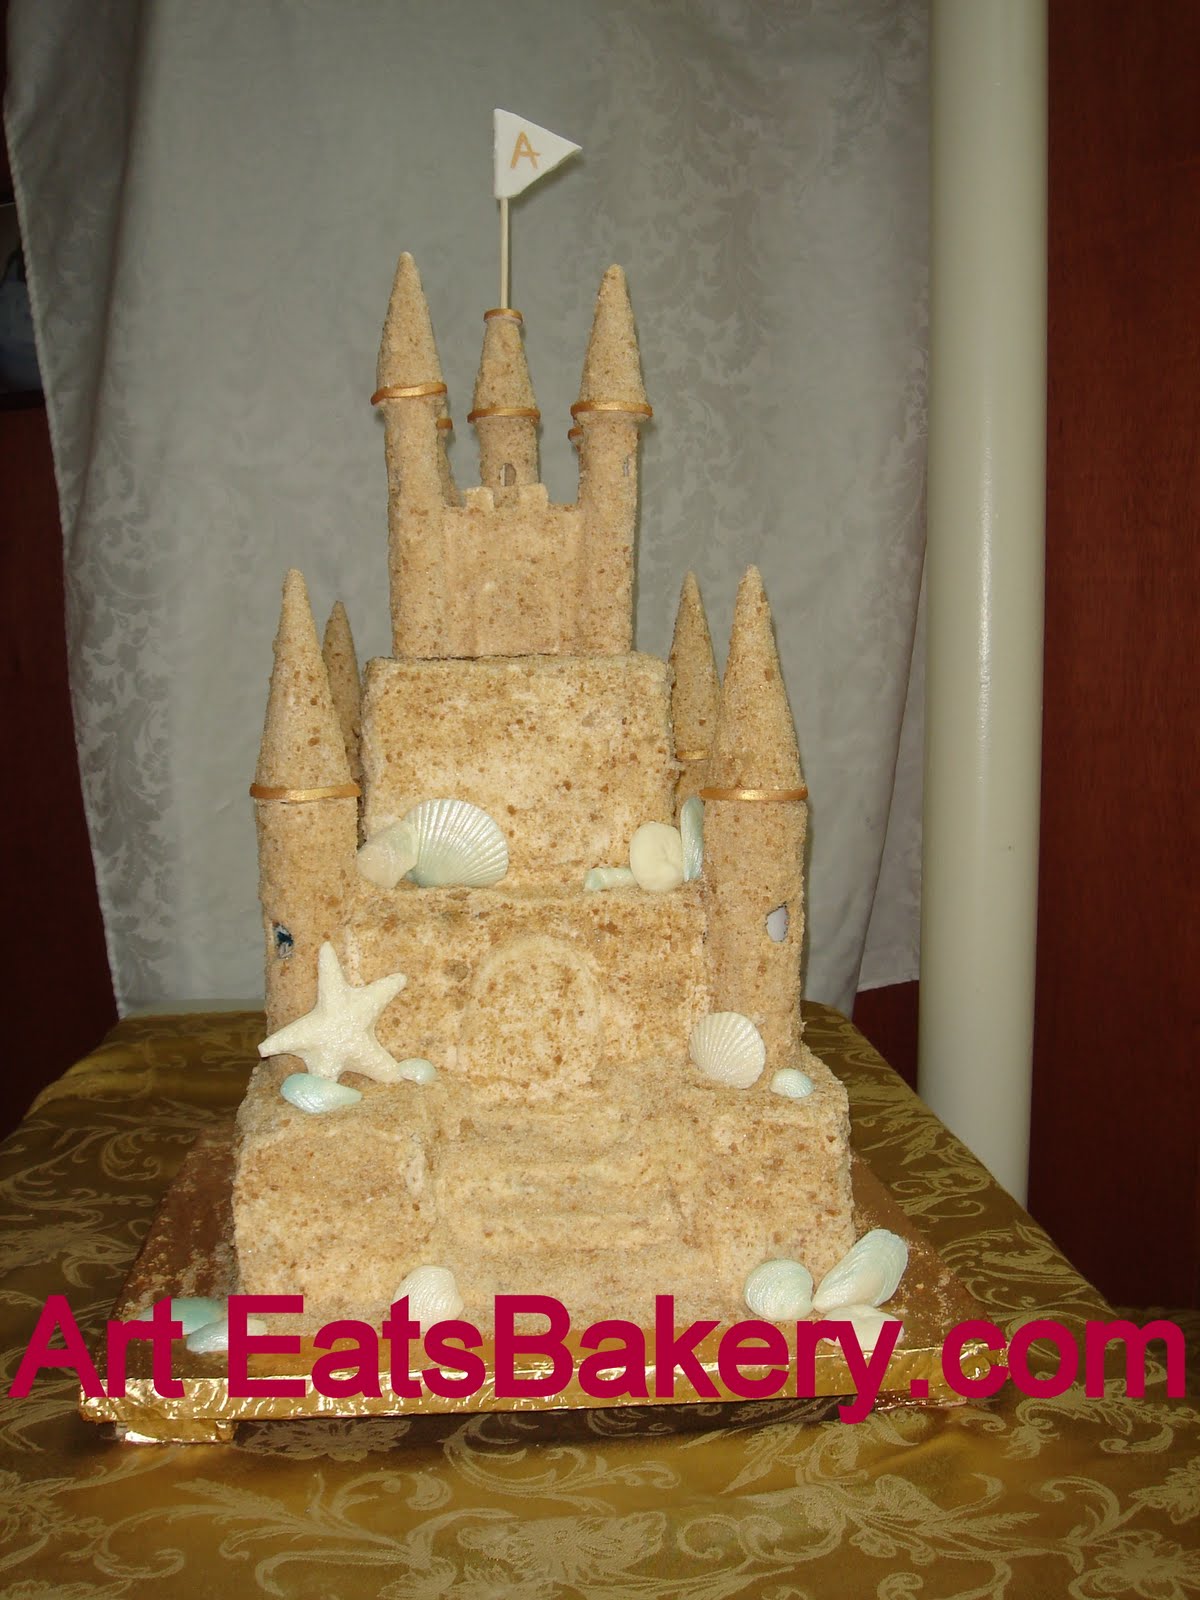 Art Eats Bakery custom fondant wedding  and birthday cake  